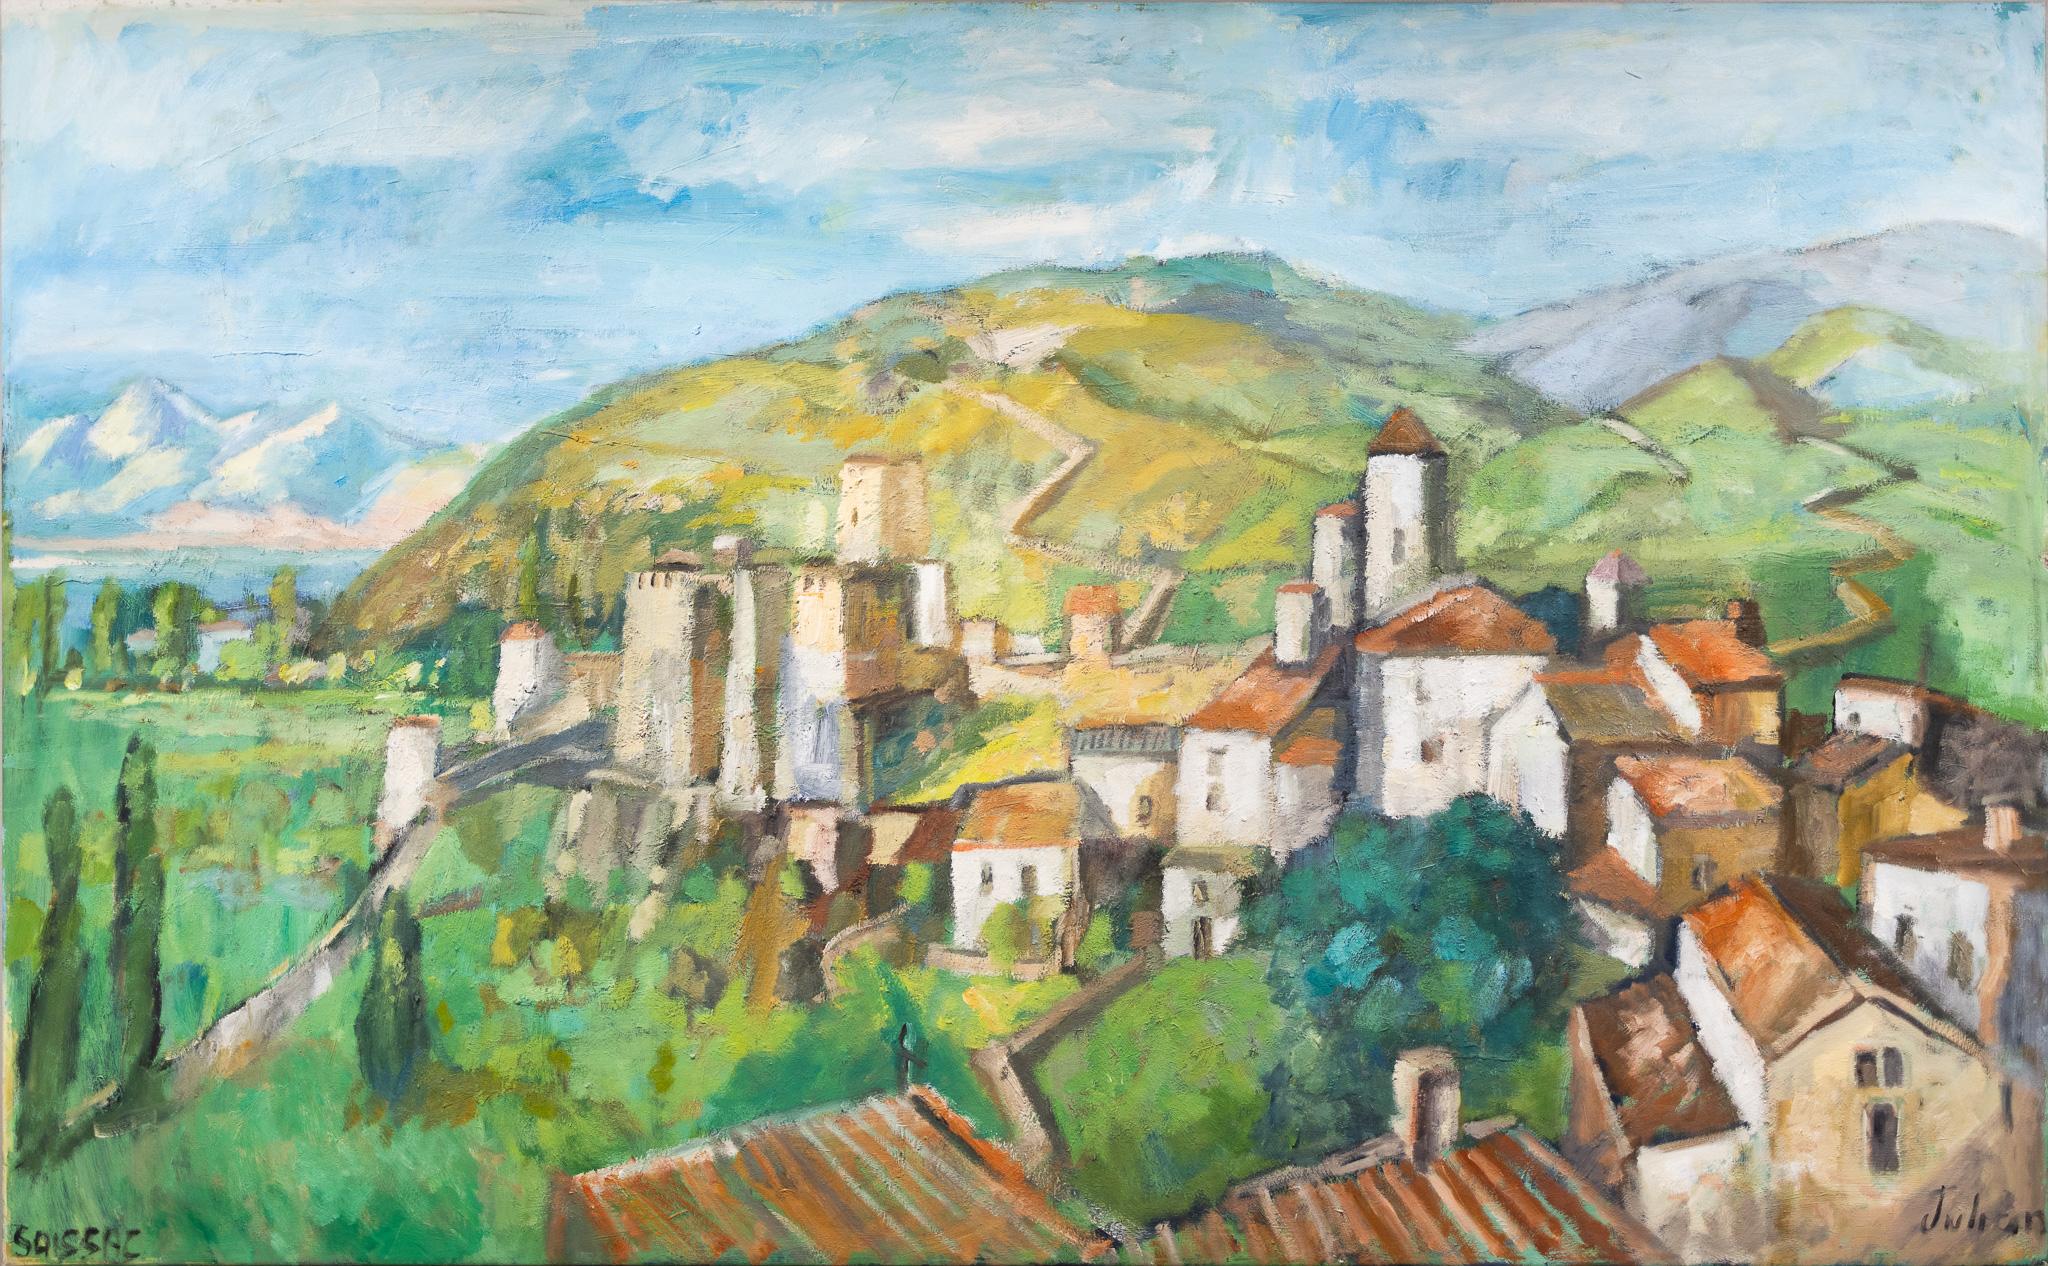 Julian Petrie Landscape Painting - "Saissac" Impressionist Landscape of Southern French Commune